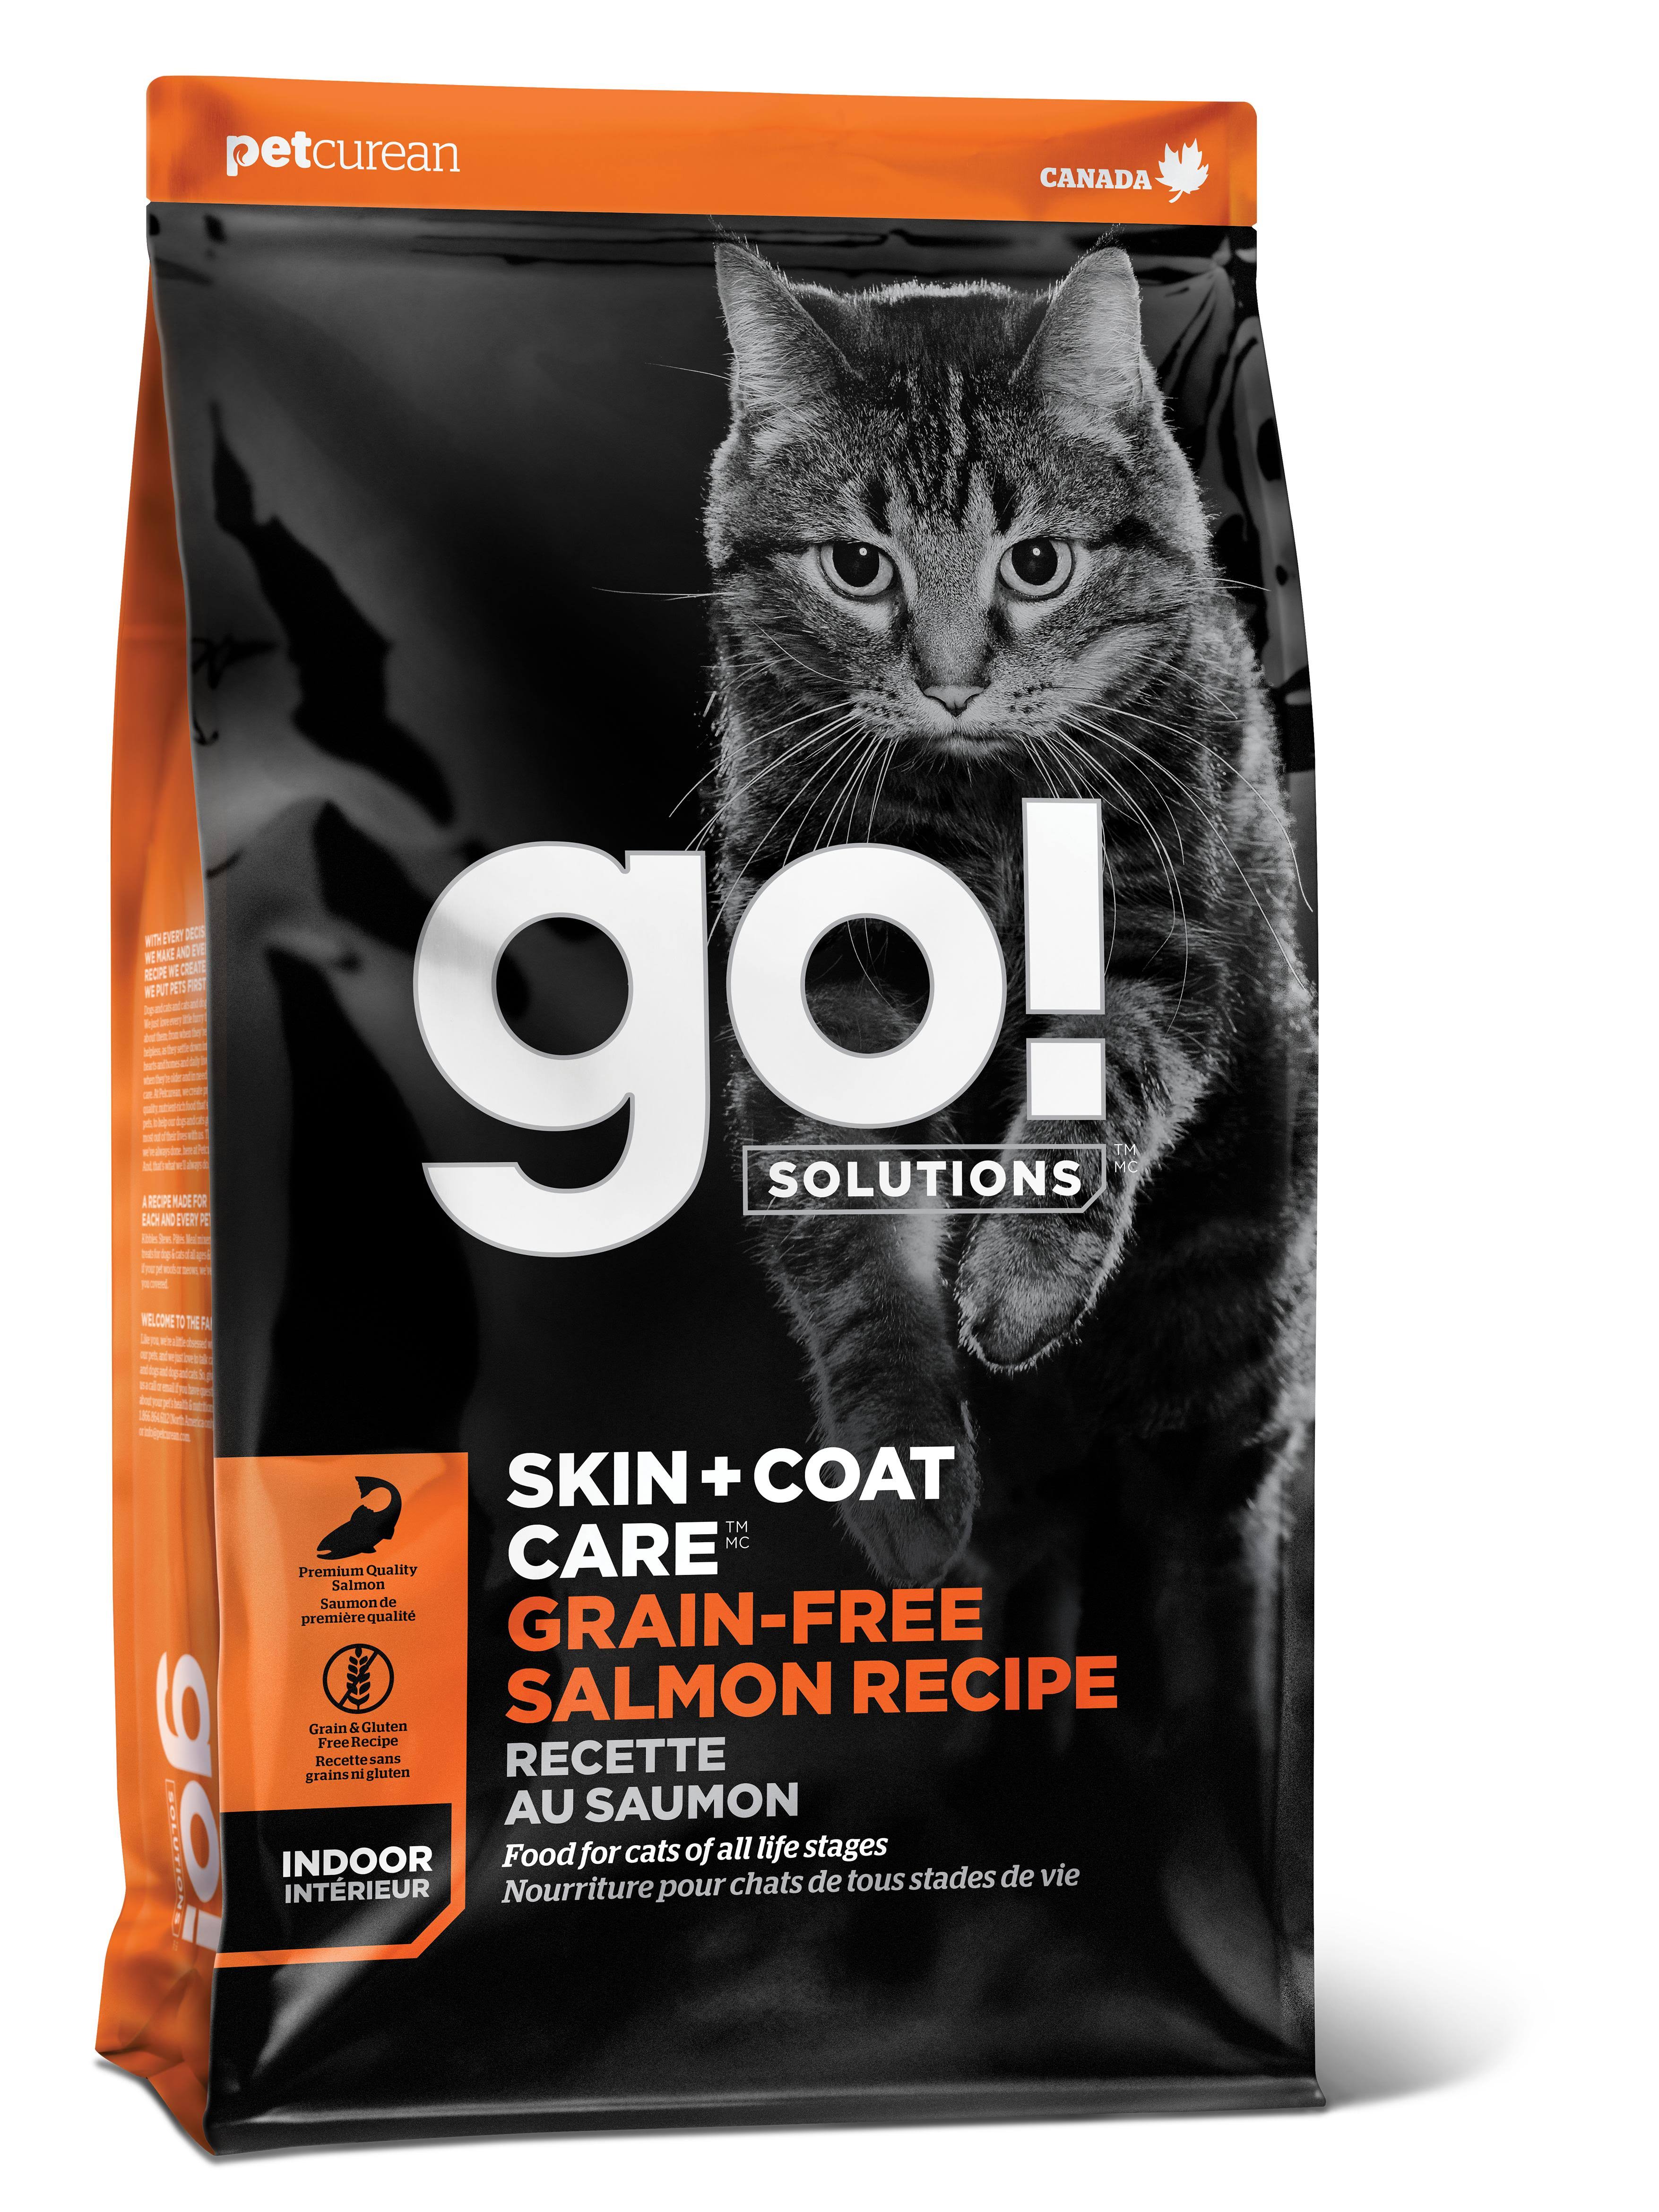 Go! Grain Free Skin + Coat Care Salmon Recipe Dry Cat Food, 8 lb